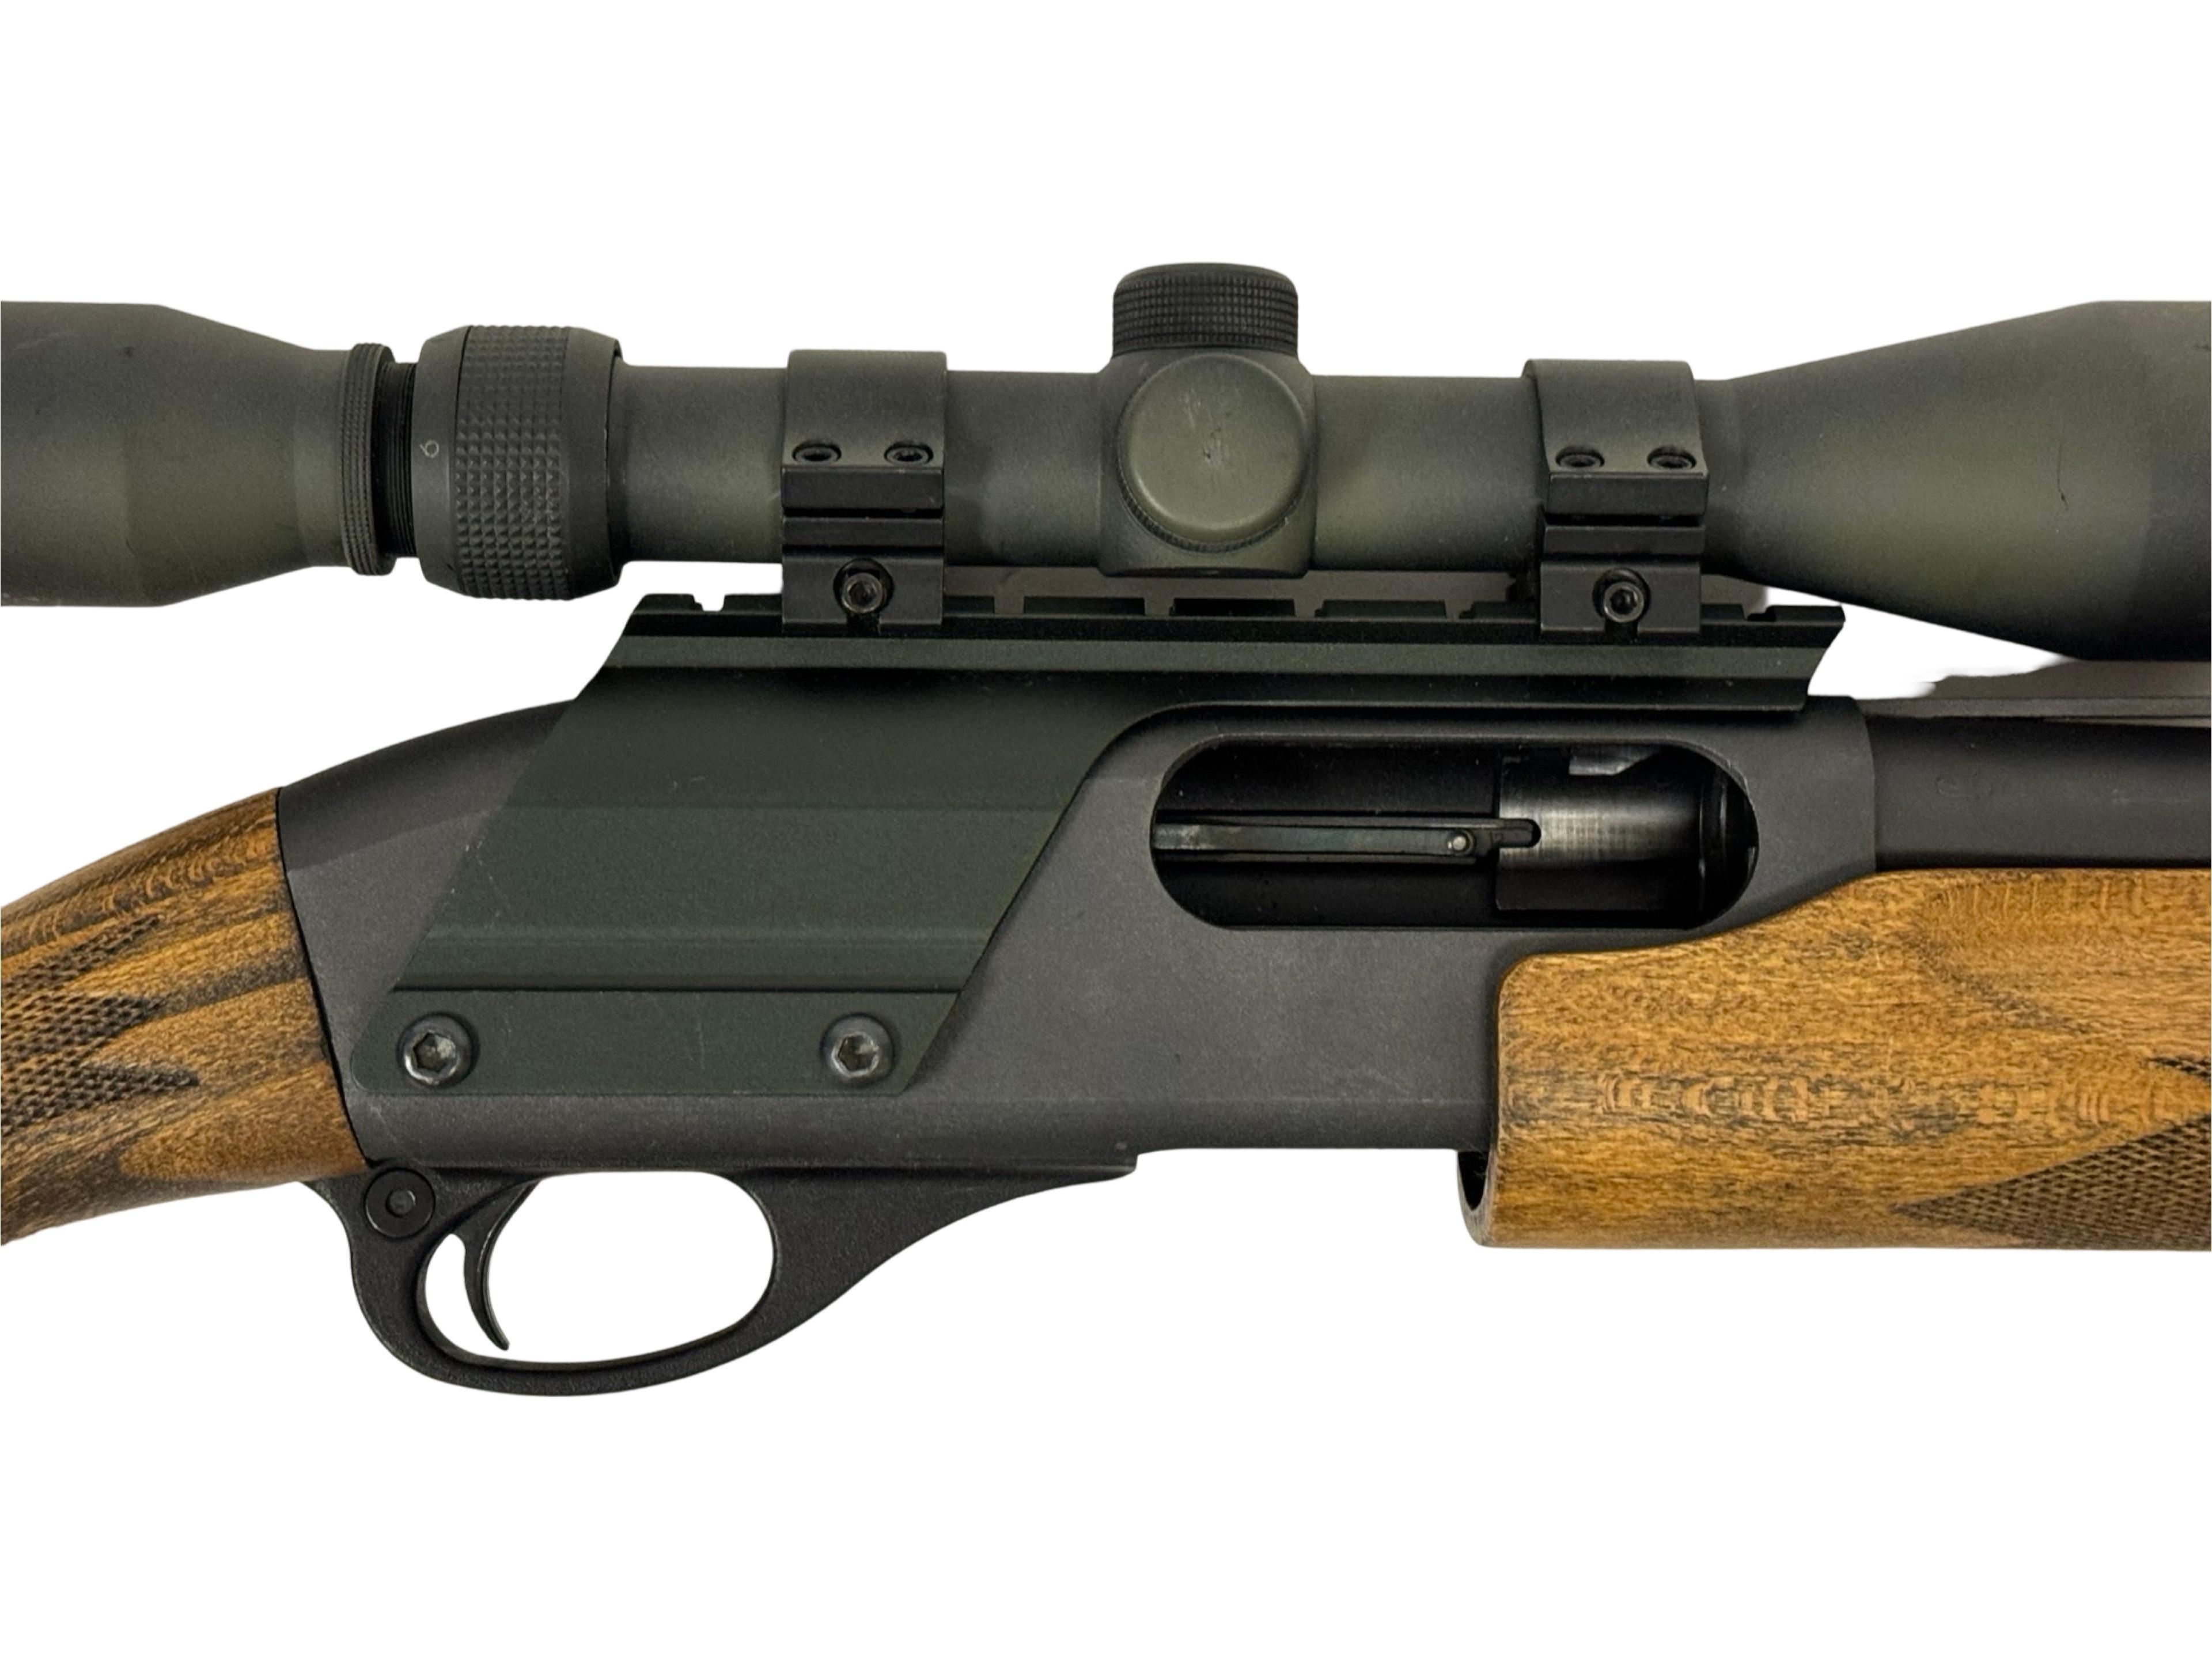 Excellent Remington 870 Express Magnum 12 GA. Pump Action Turkey Hunting Shotgun with Scope